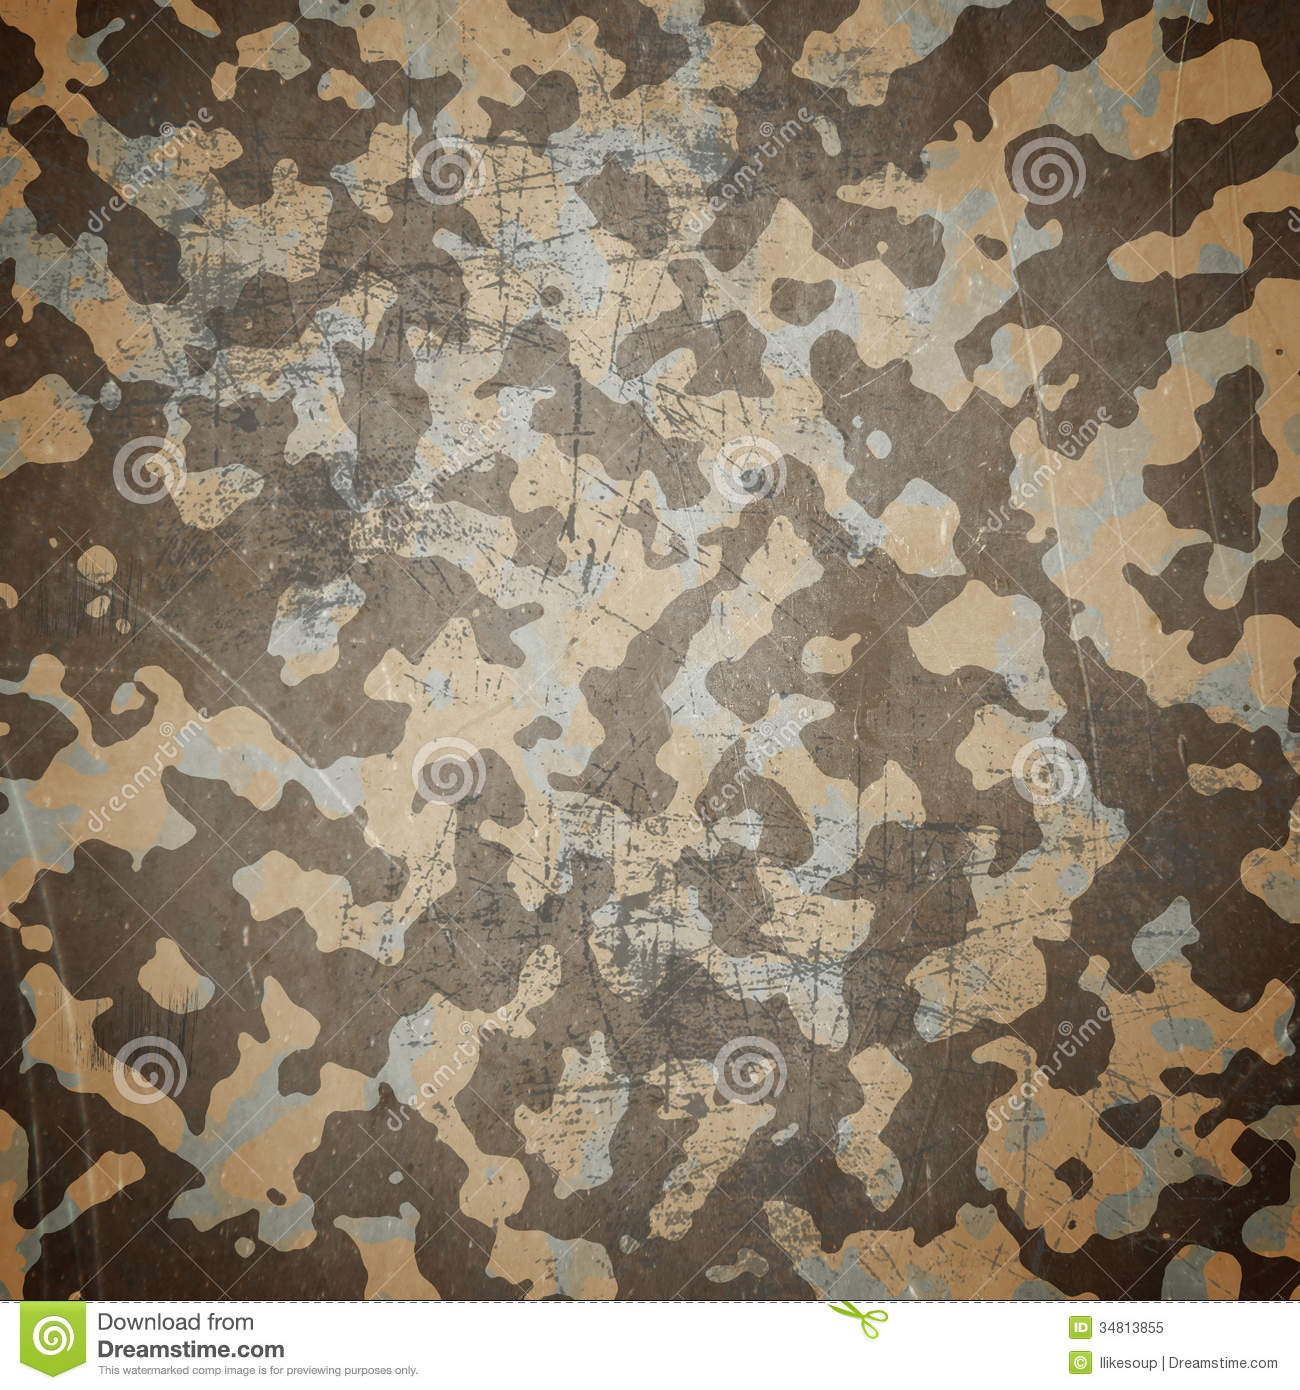 Desert Army Camouflage Background Royalty Free Stock Photo   Image